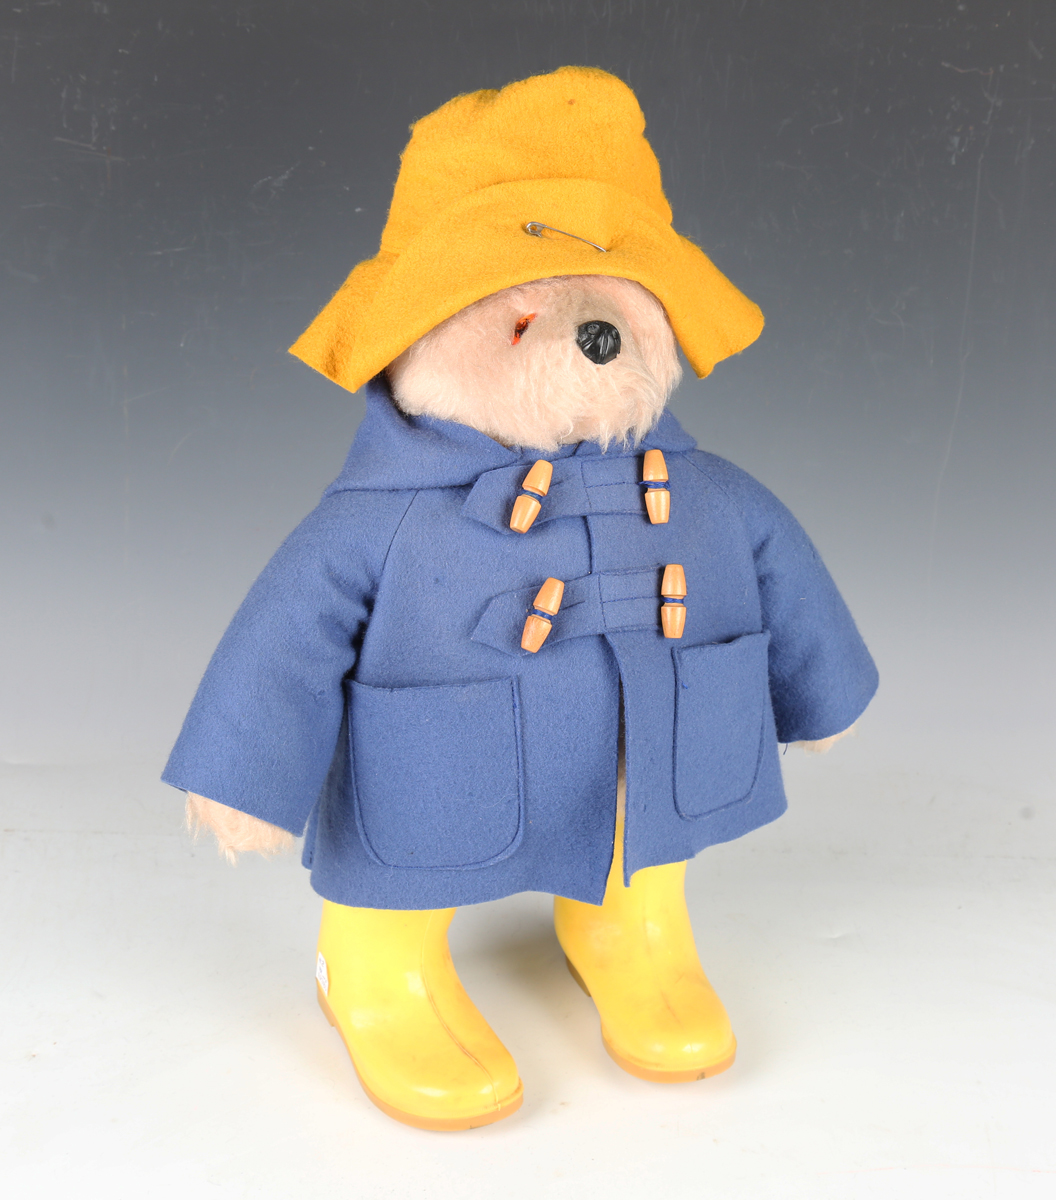 A Gabrielle Designs Ltd Paddington Bear wearing a yellow felt hat, duffle coat and yellow Dunlop